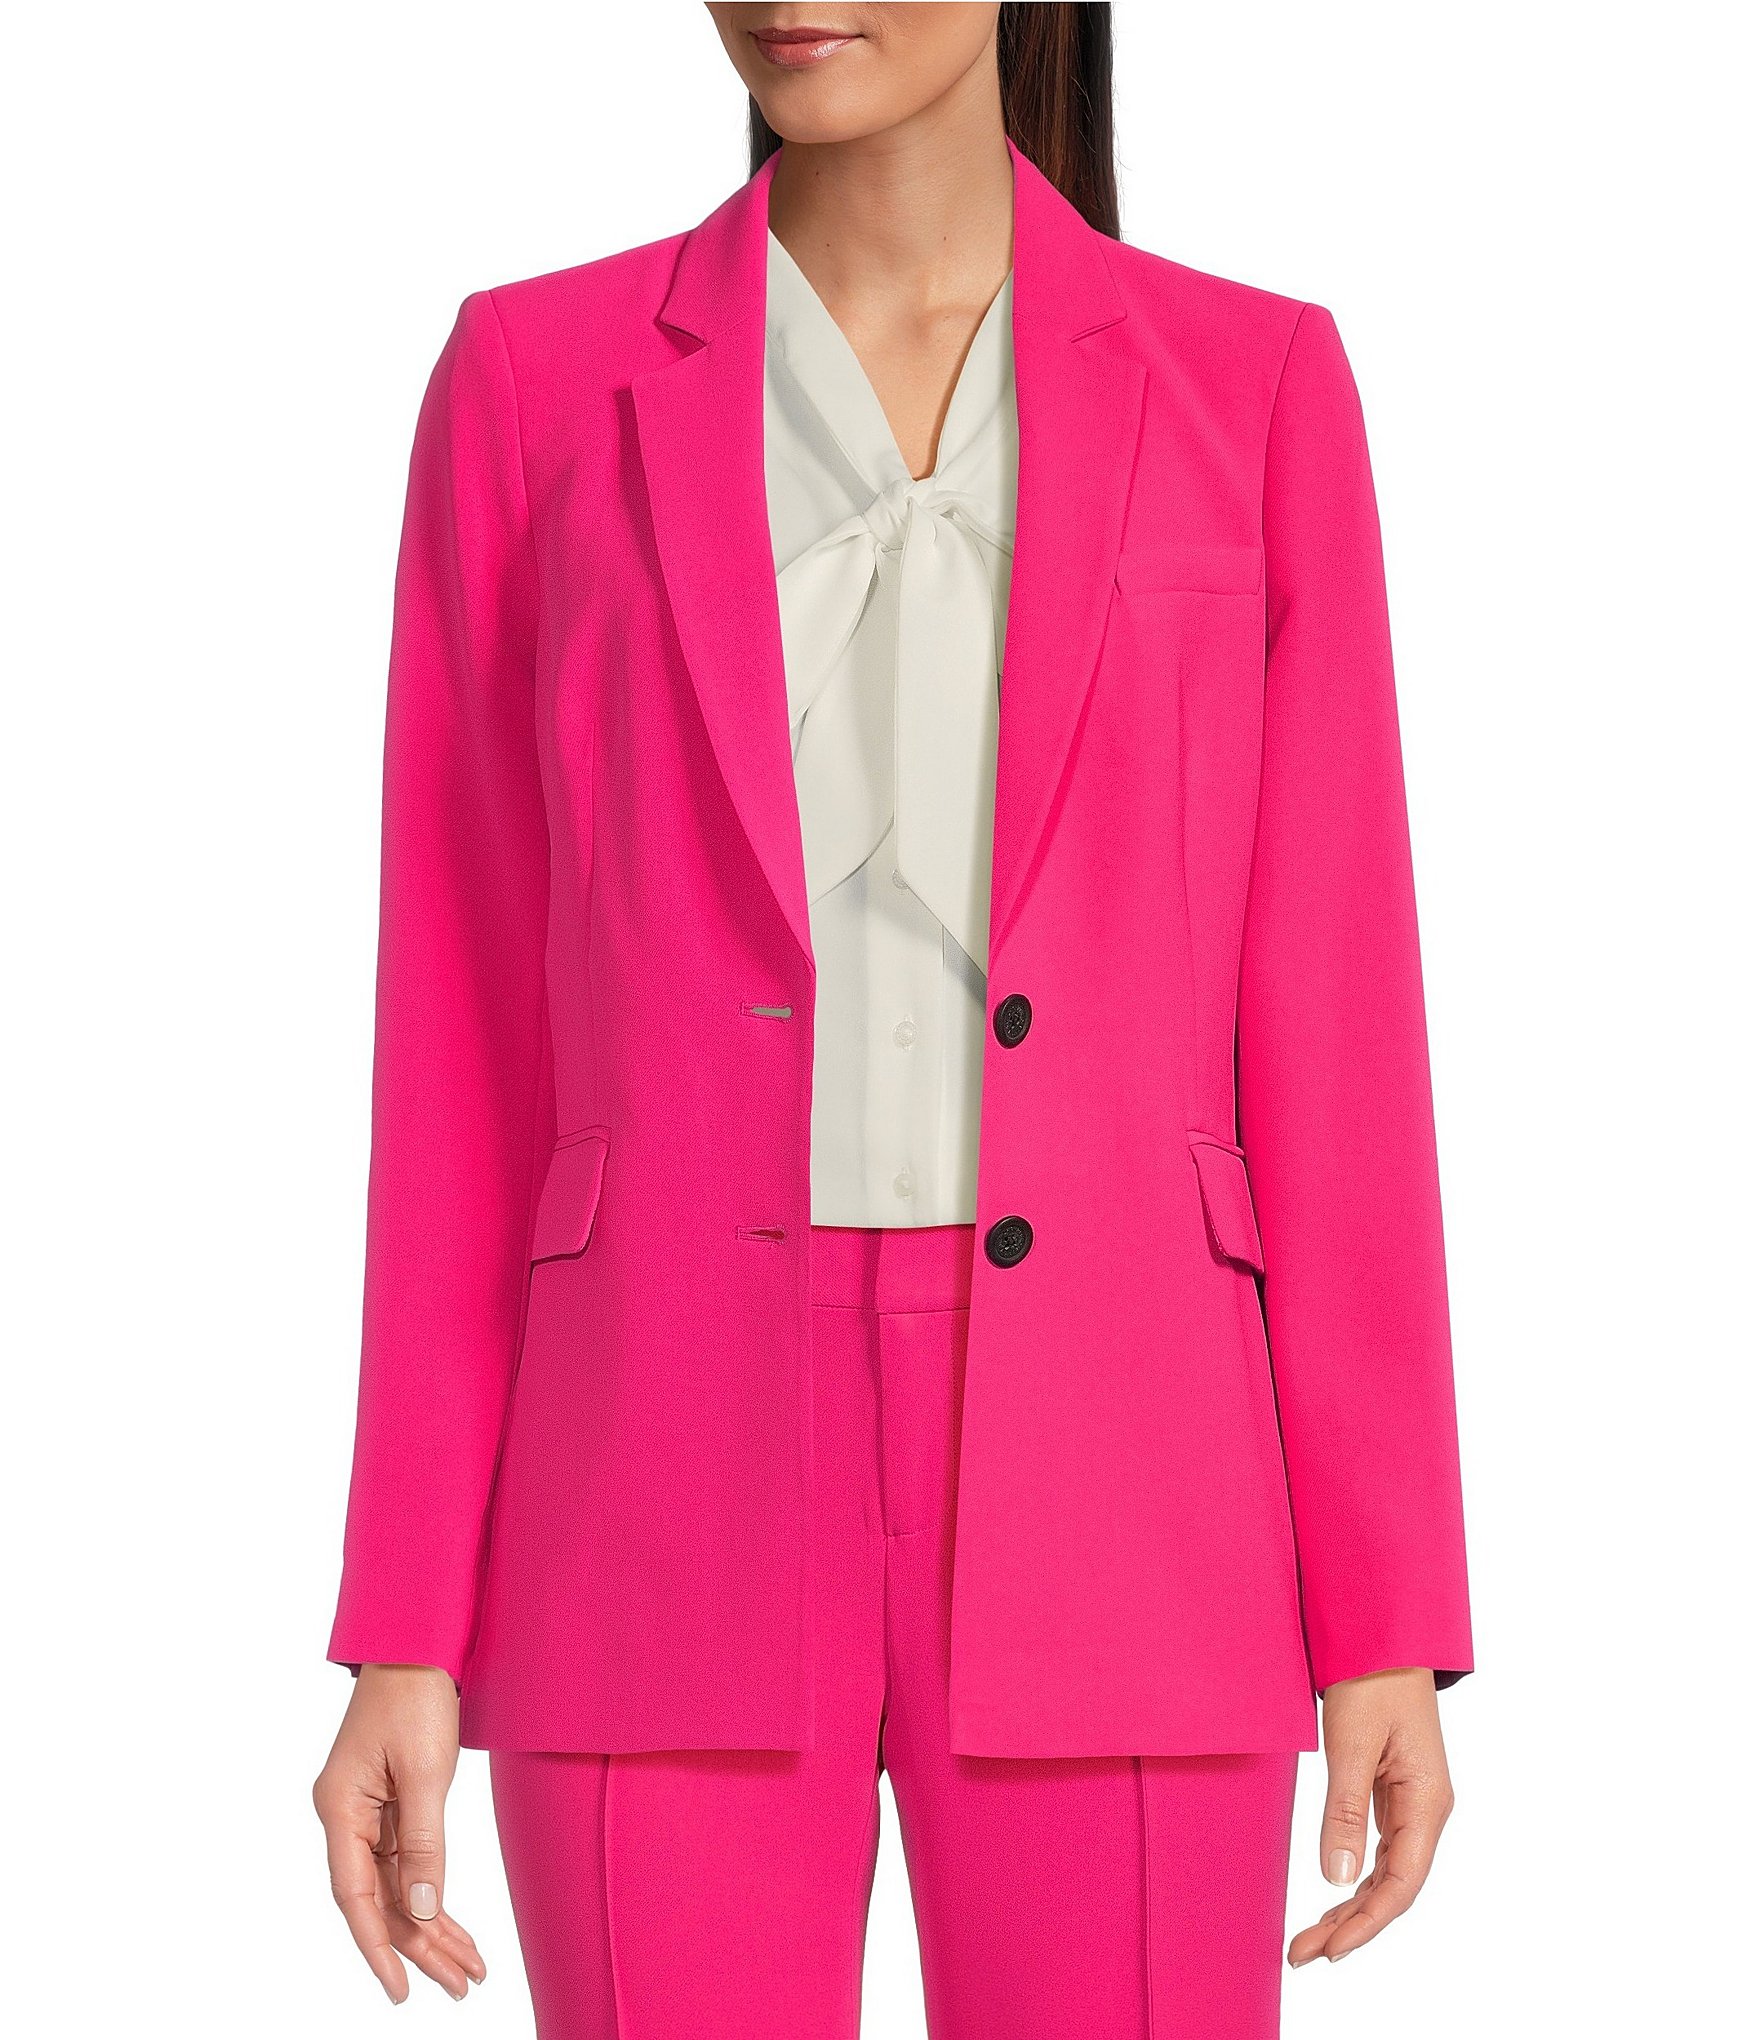 cato fashions NWT $32.99 women's stretch button front blazer jacket 26 wine  G2